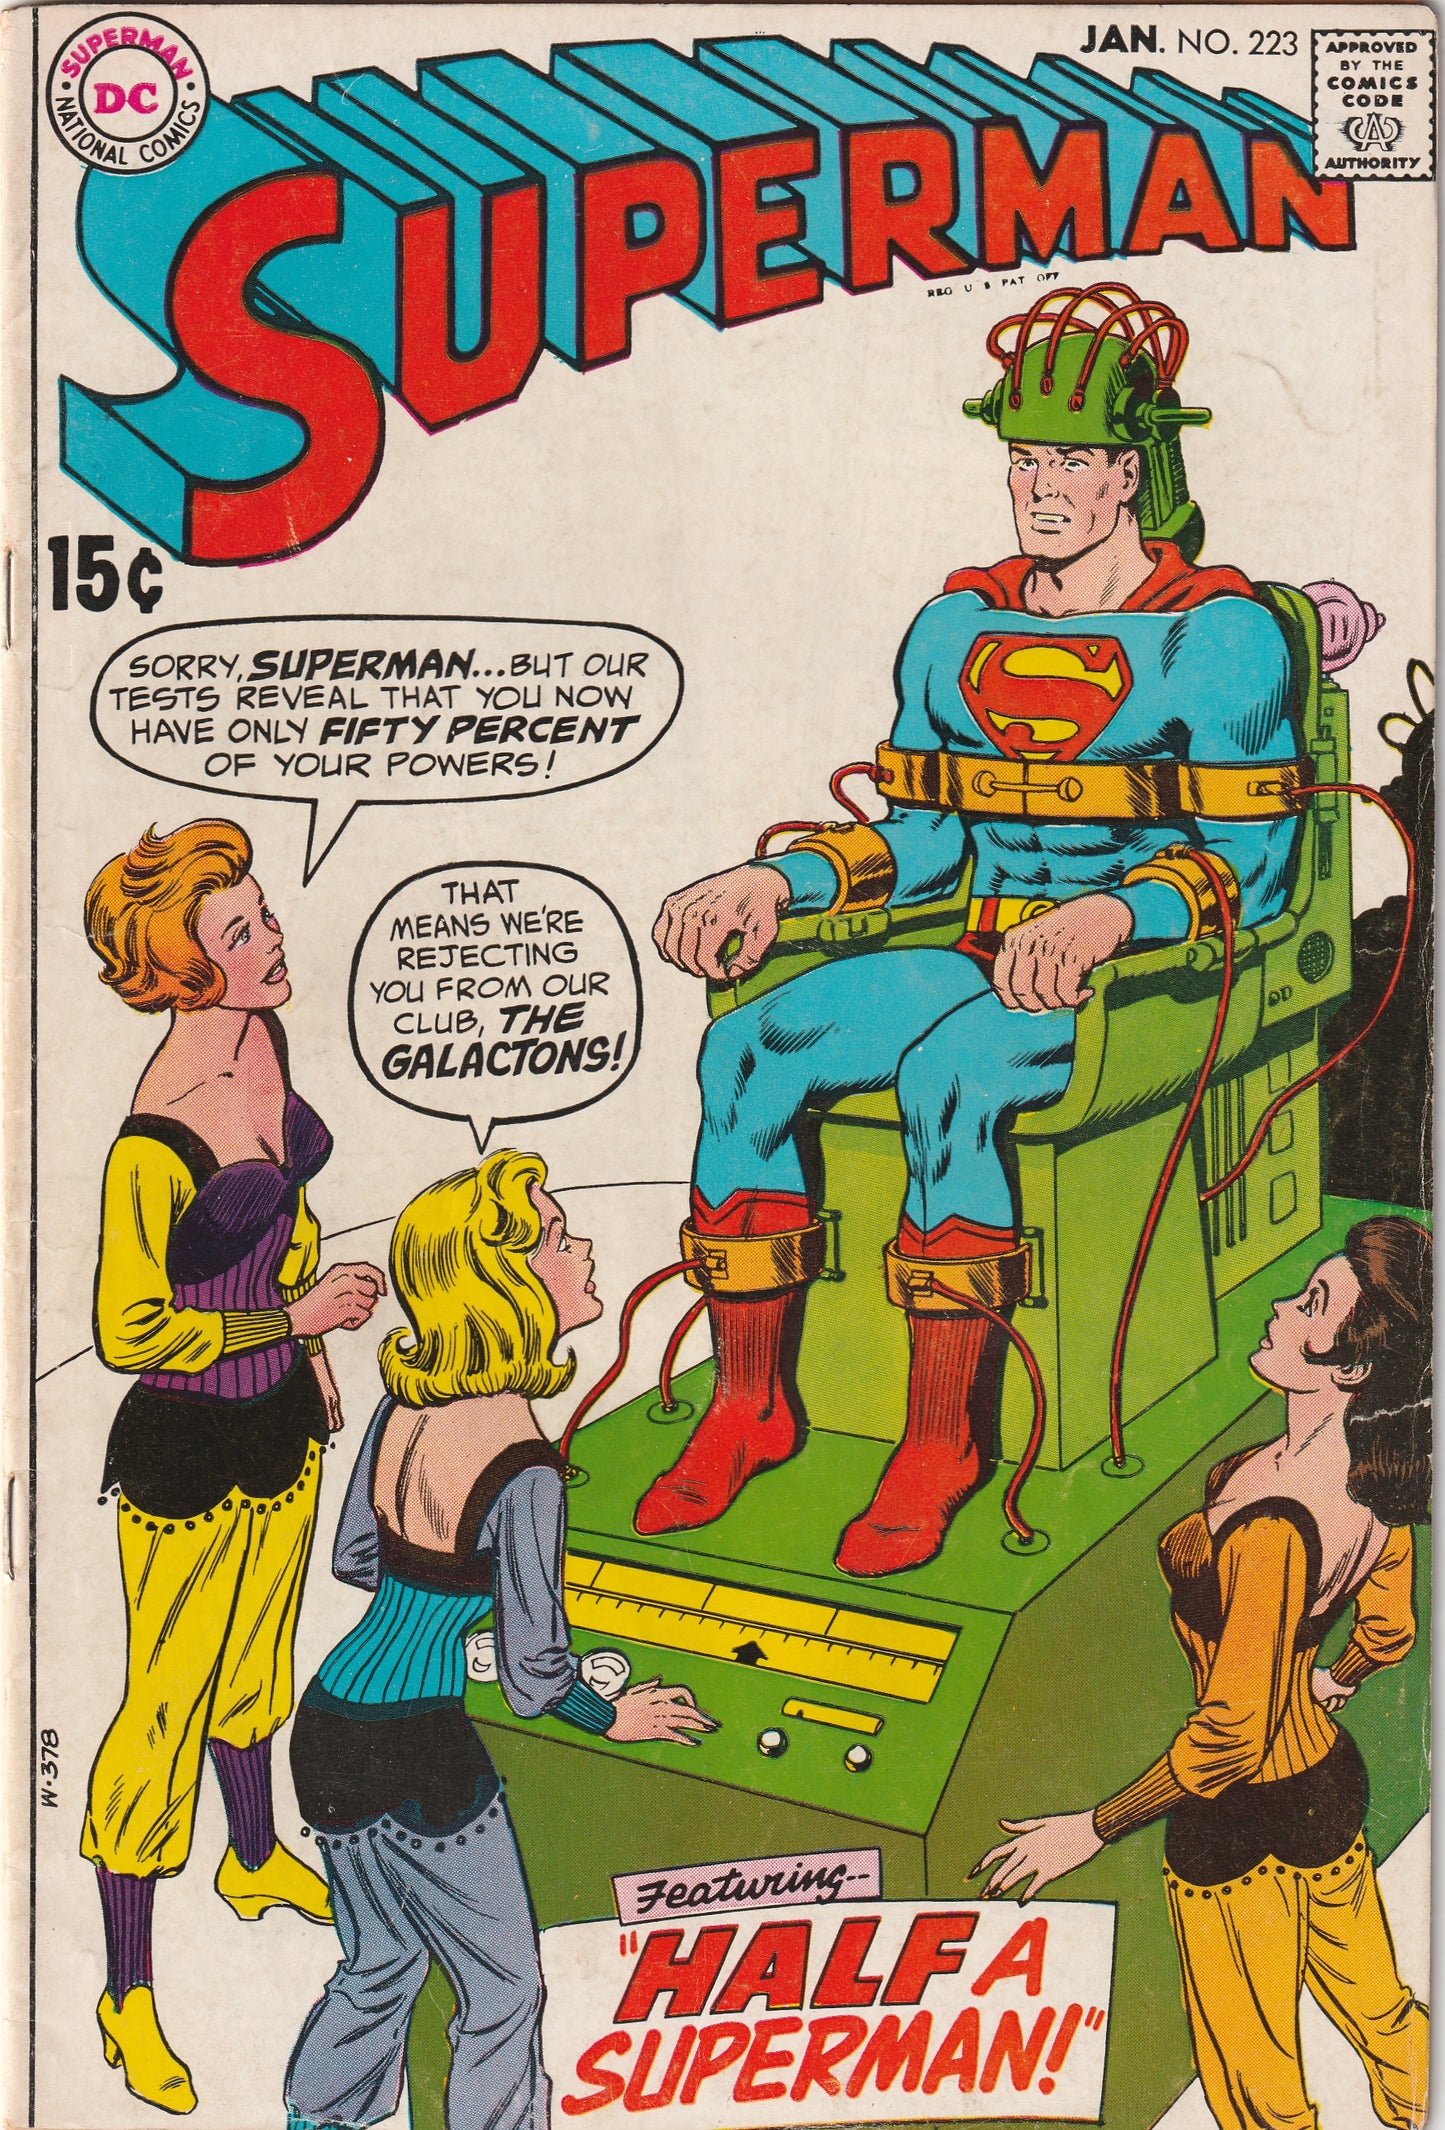 Superman #223 (1970)